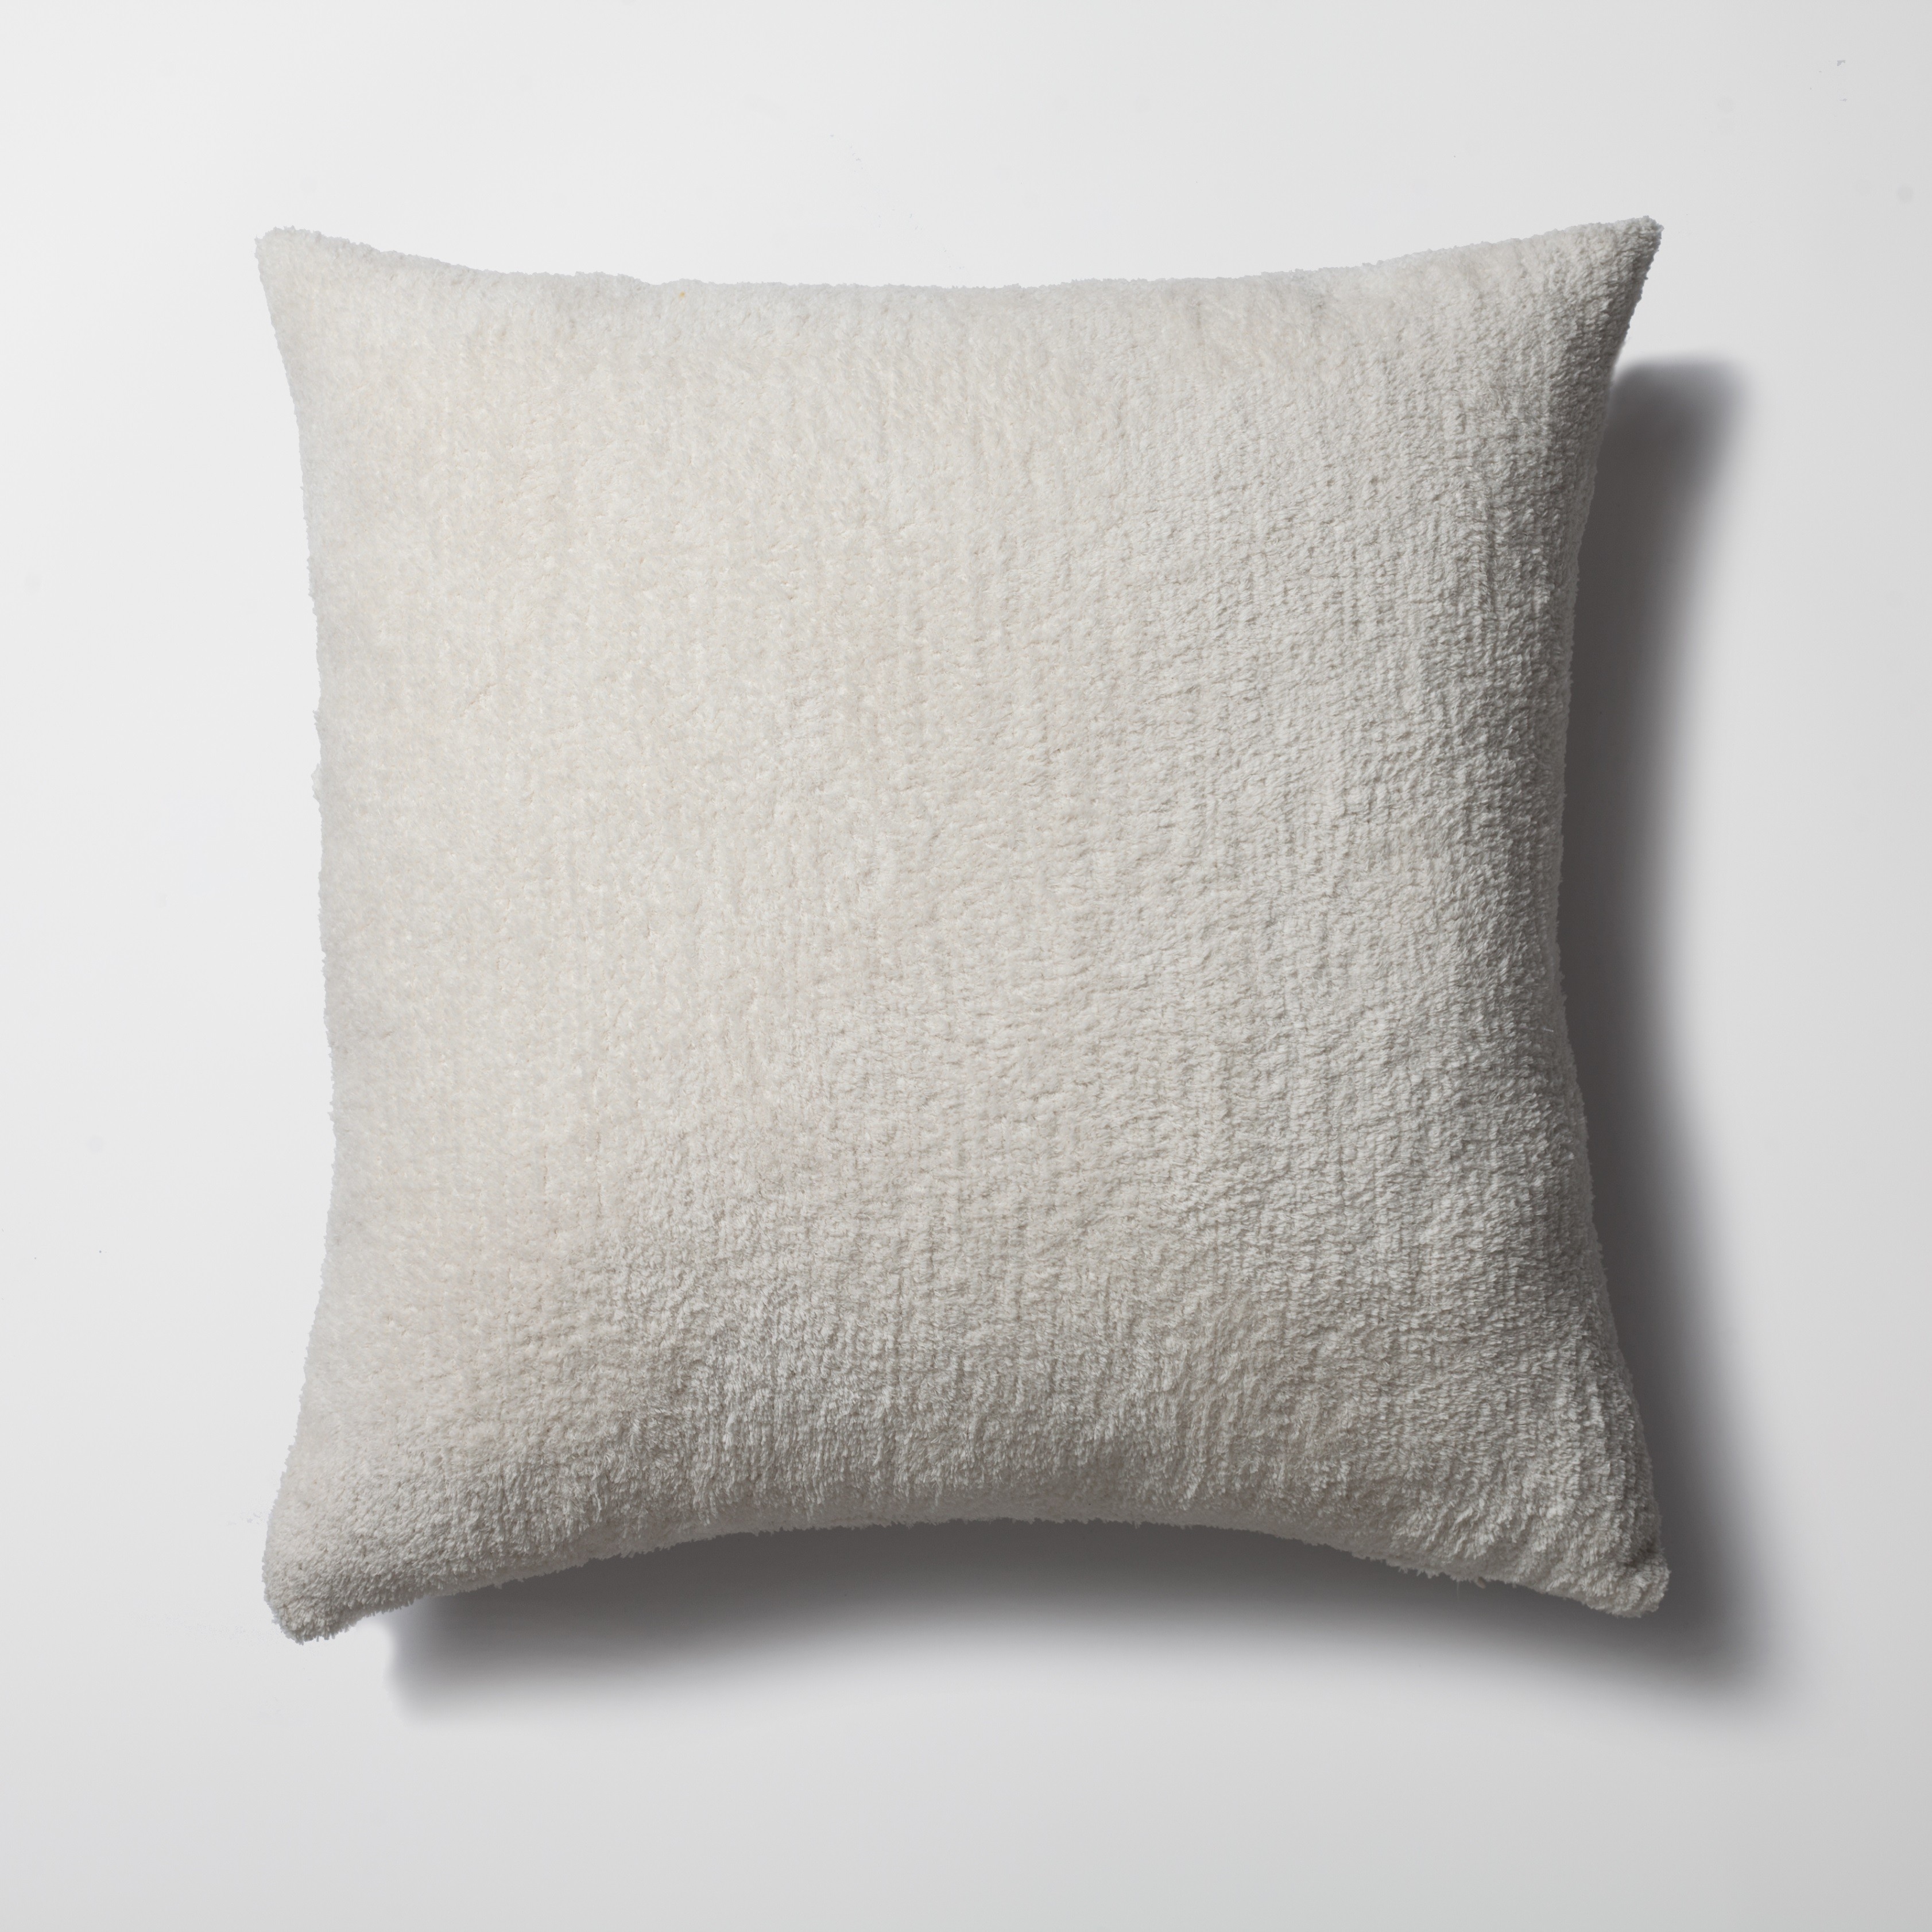 " Leros " - Decorative Pillow - 3-Piece Combo Set (Cover Only)